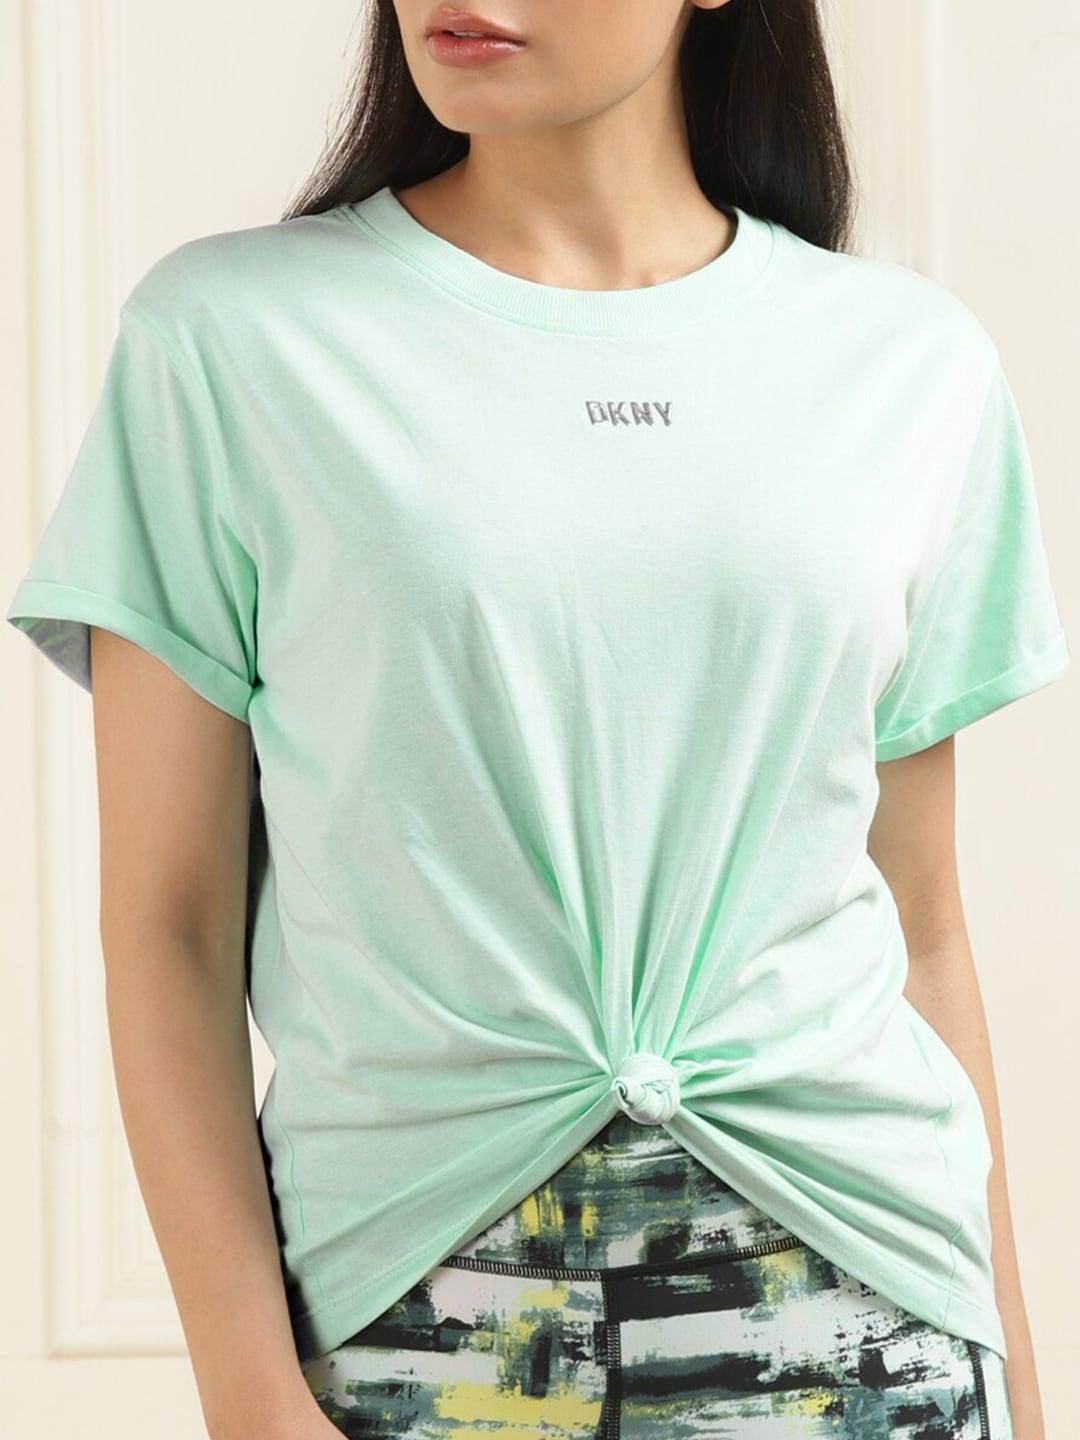 dkny brand logo printed cotton t-shirt